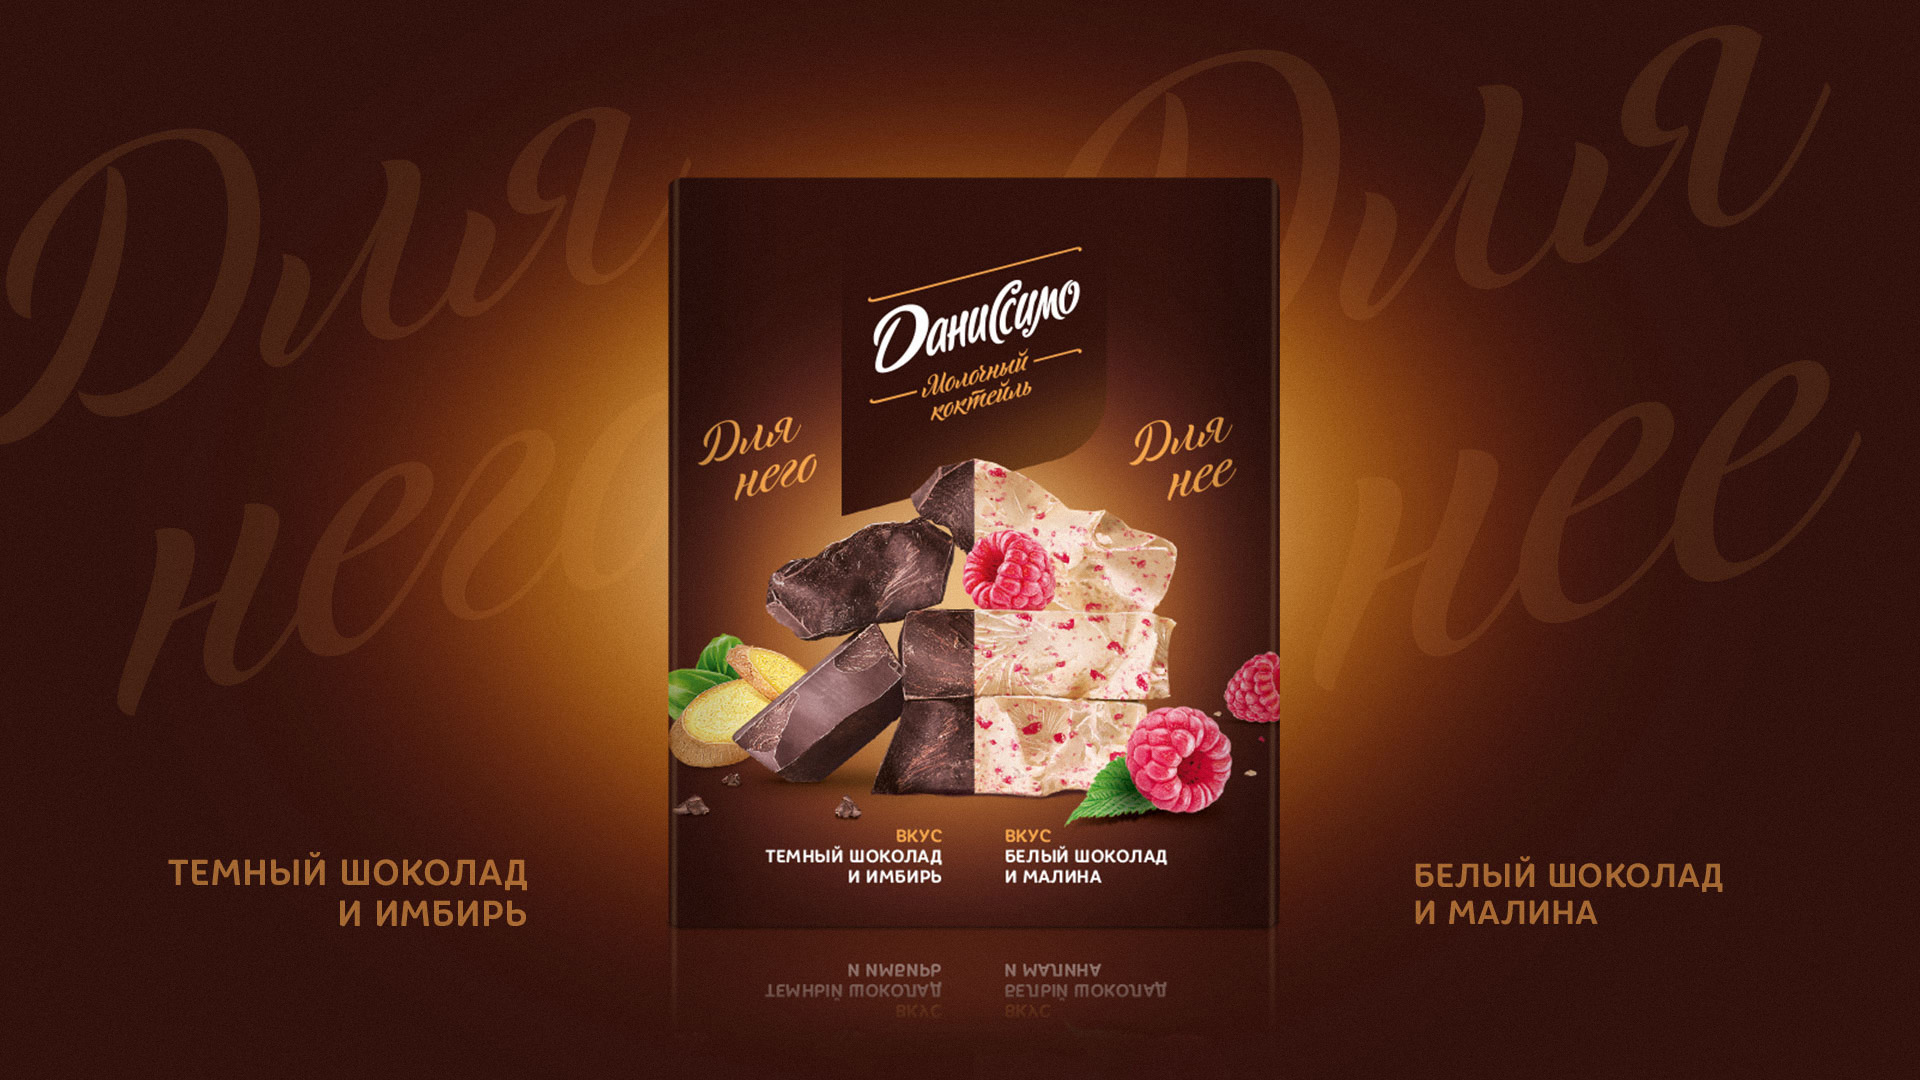 Packaging Design for Limited Edition Milkshakes from Belarus